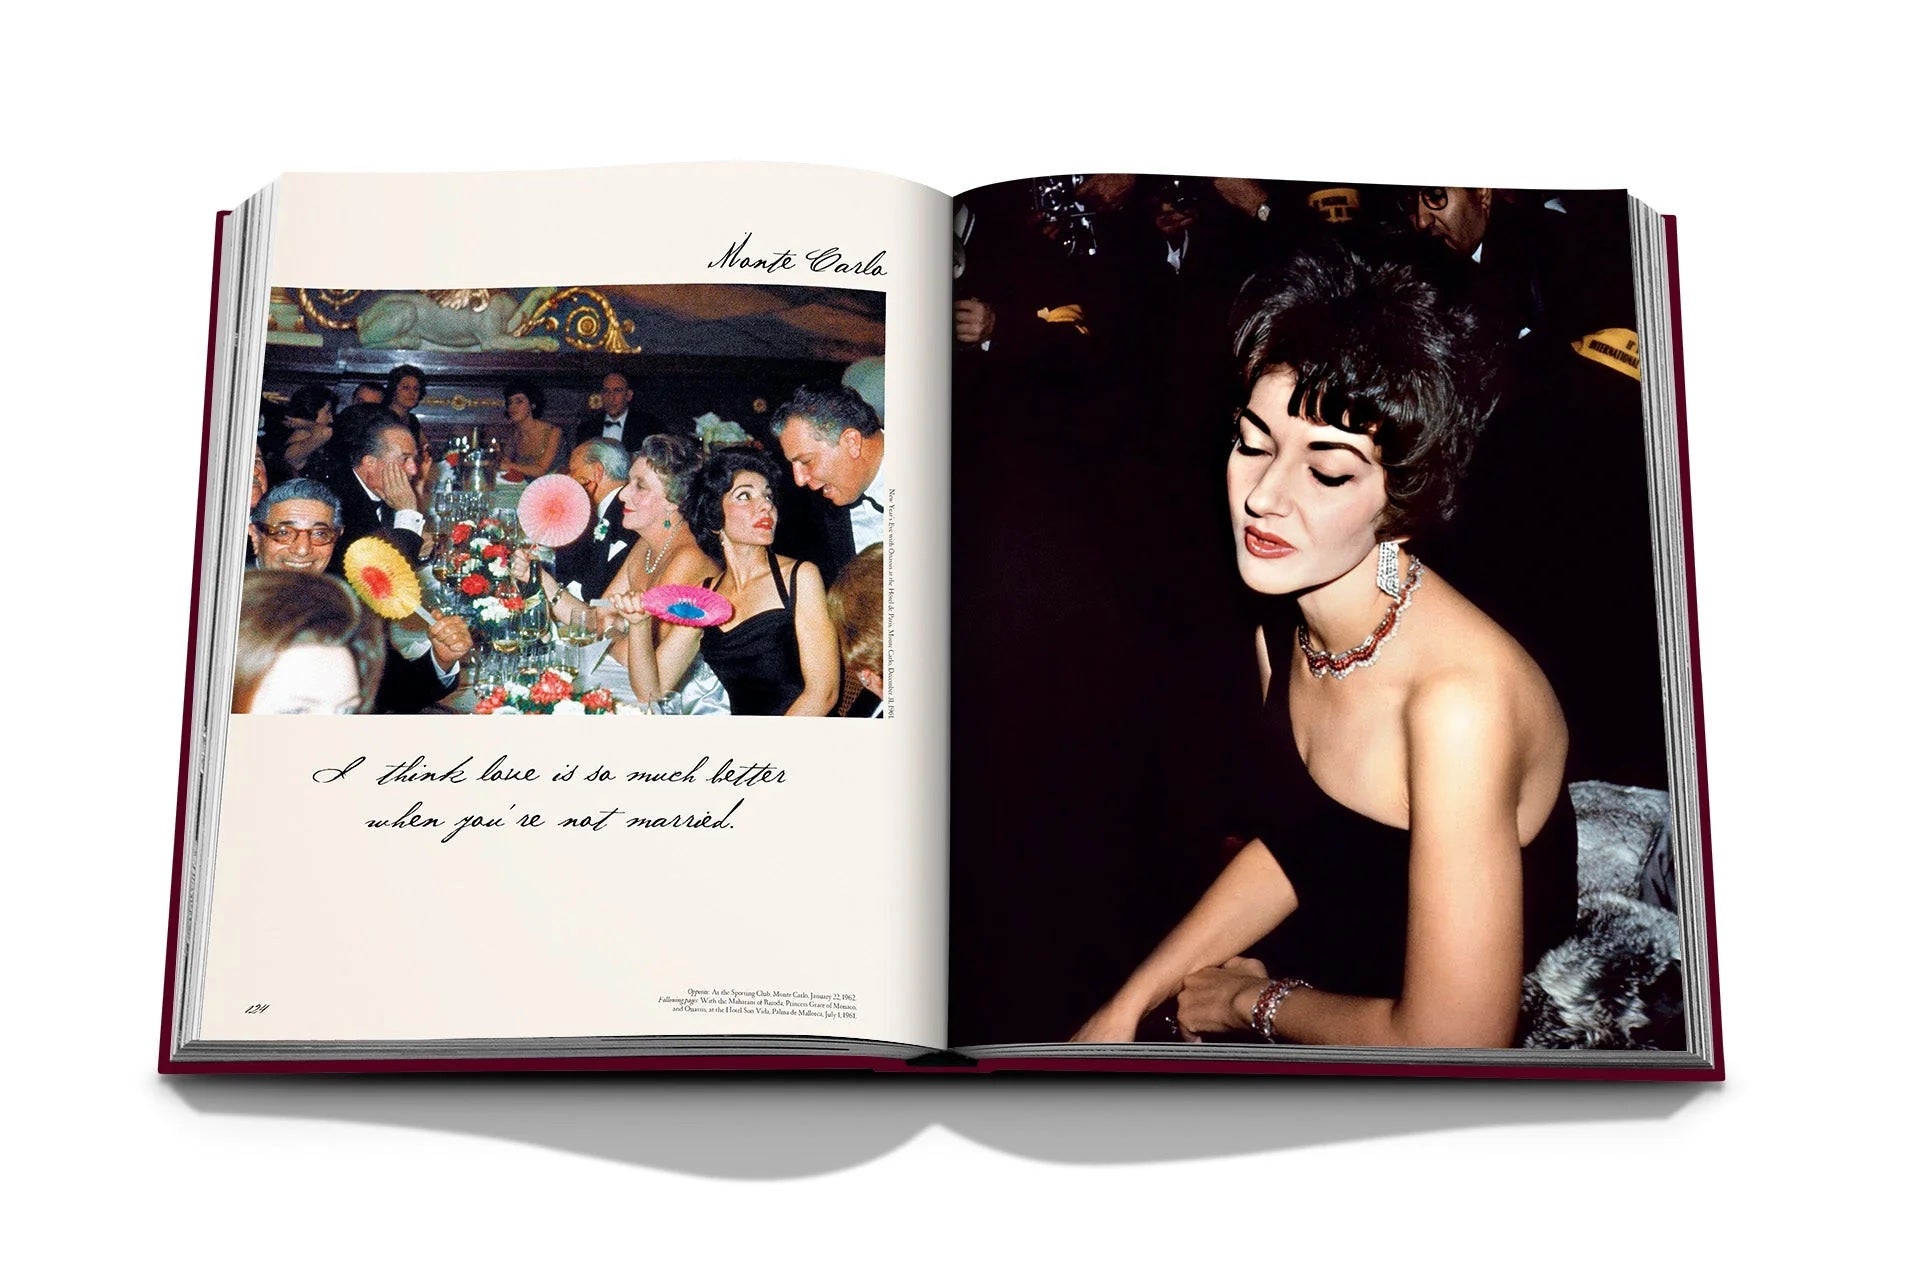 Maria by Callas. 100th Anniversary Edition